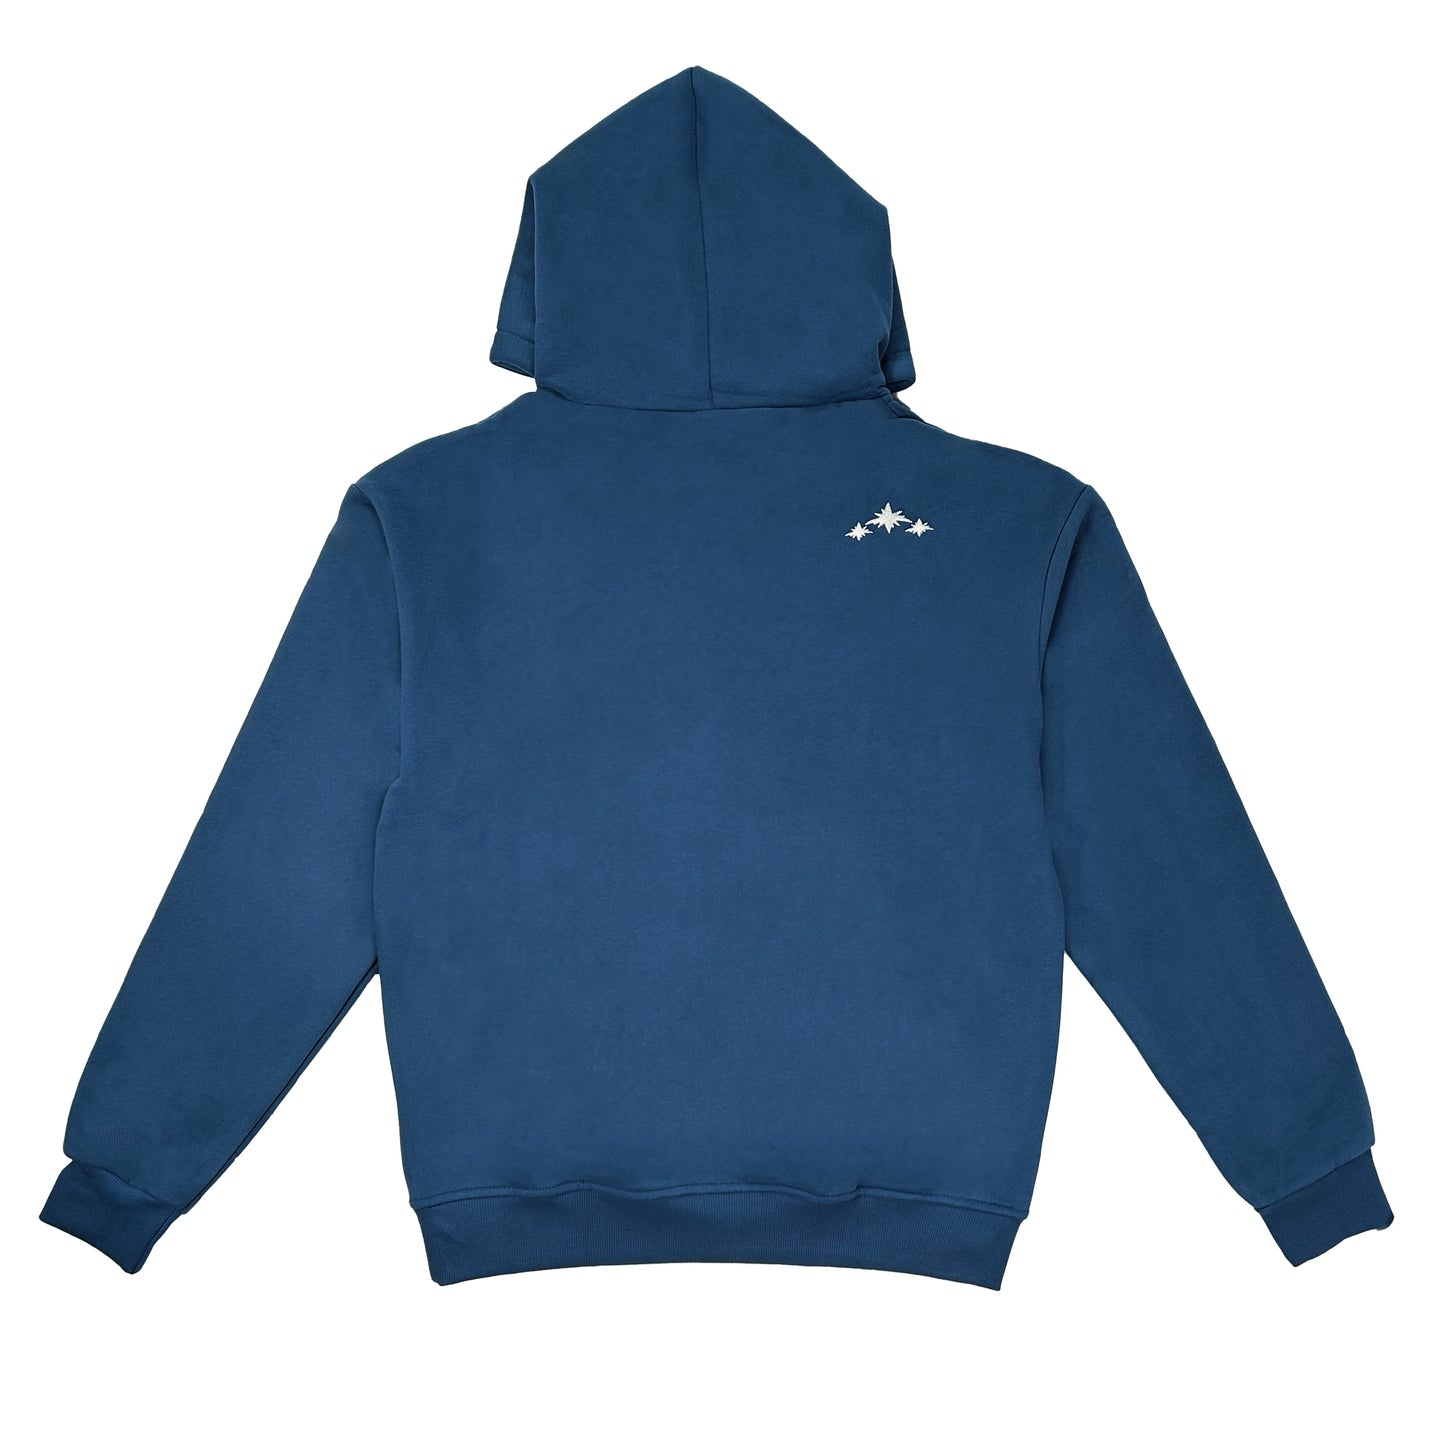 Classic blue hoodie